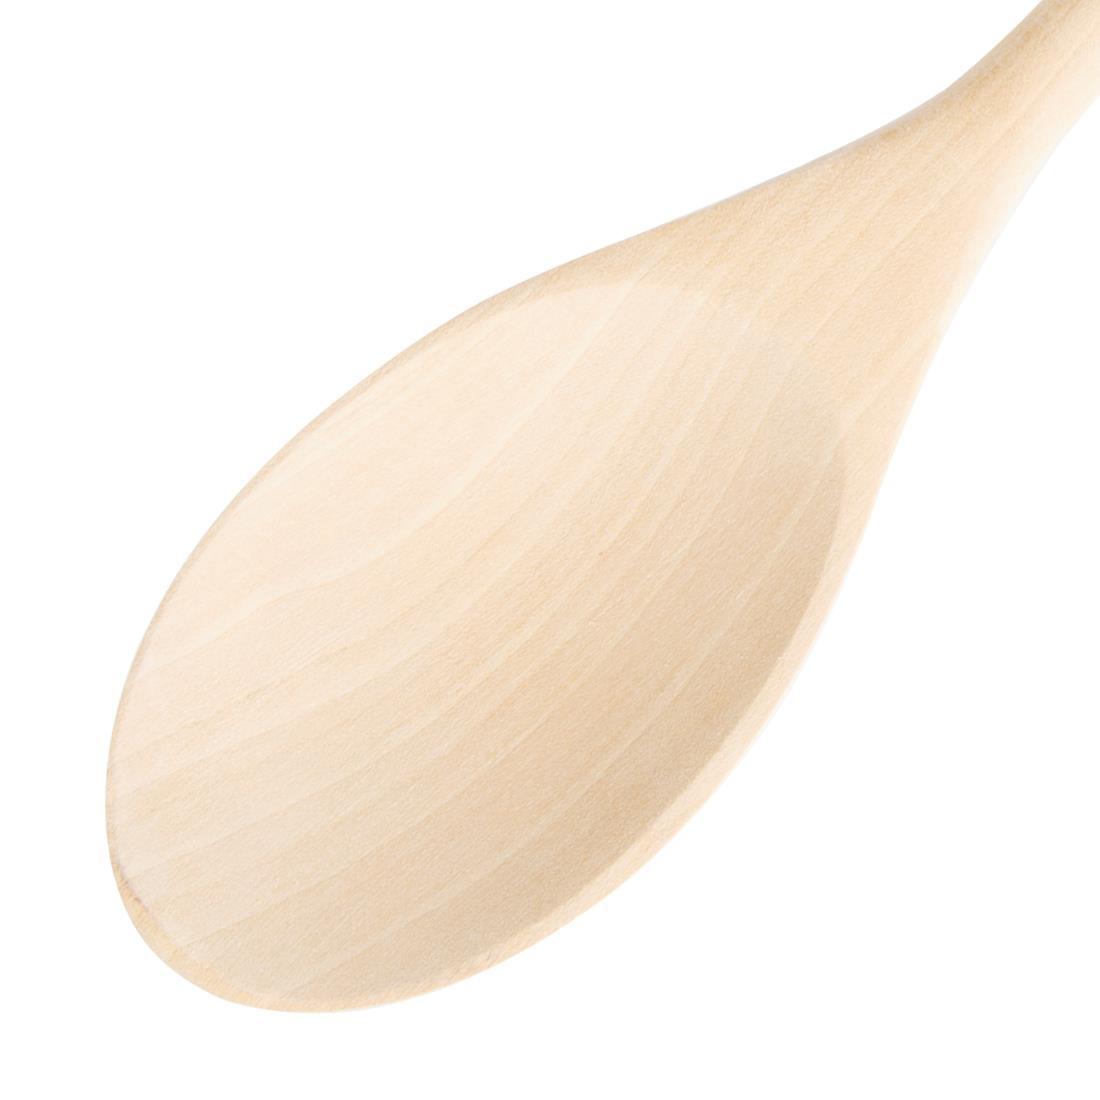 Vogue Wooden Spoon 10" - D649  - 4